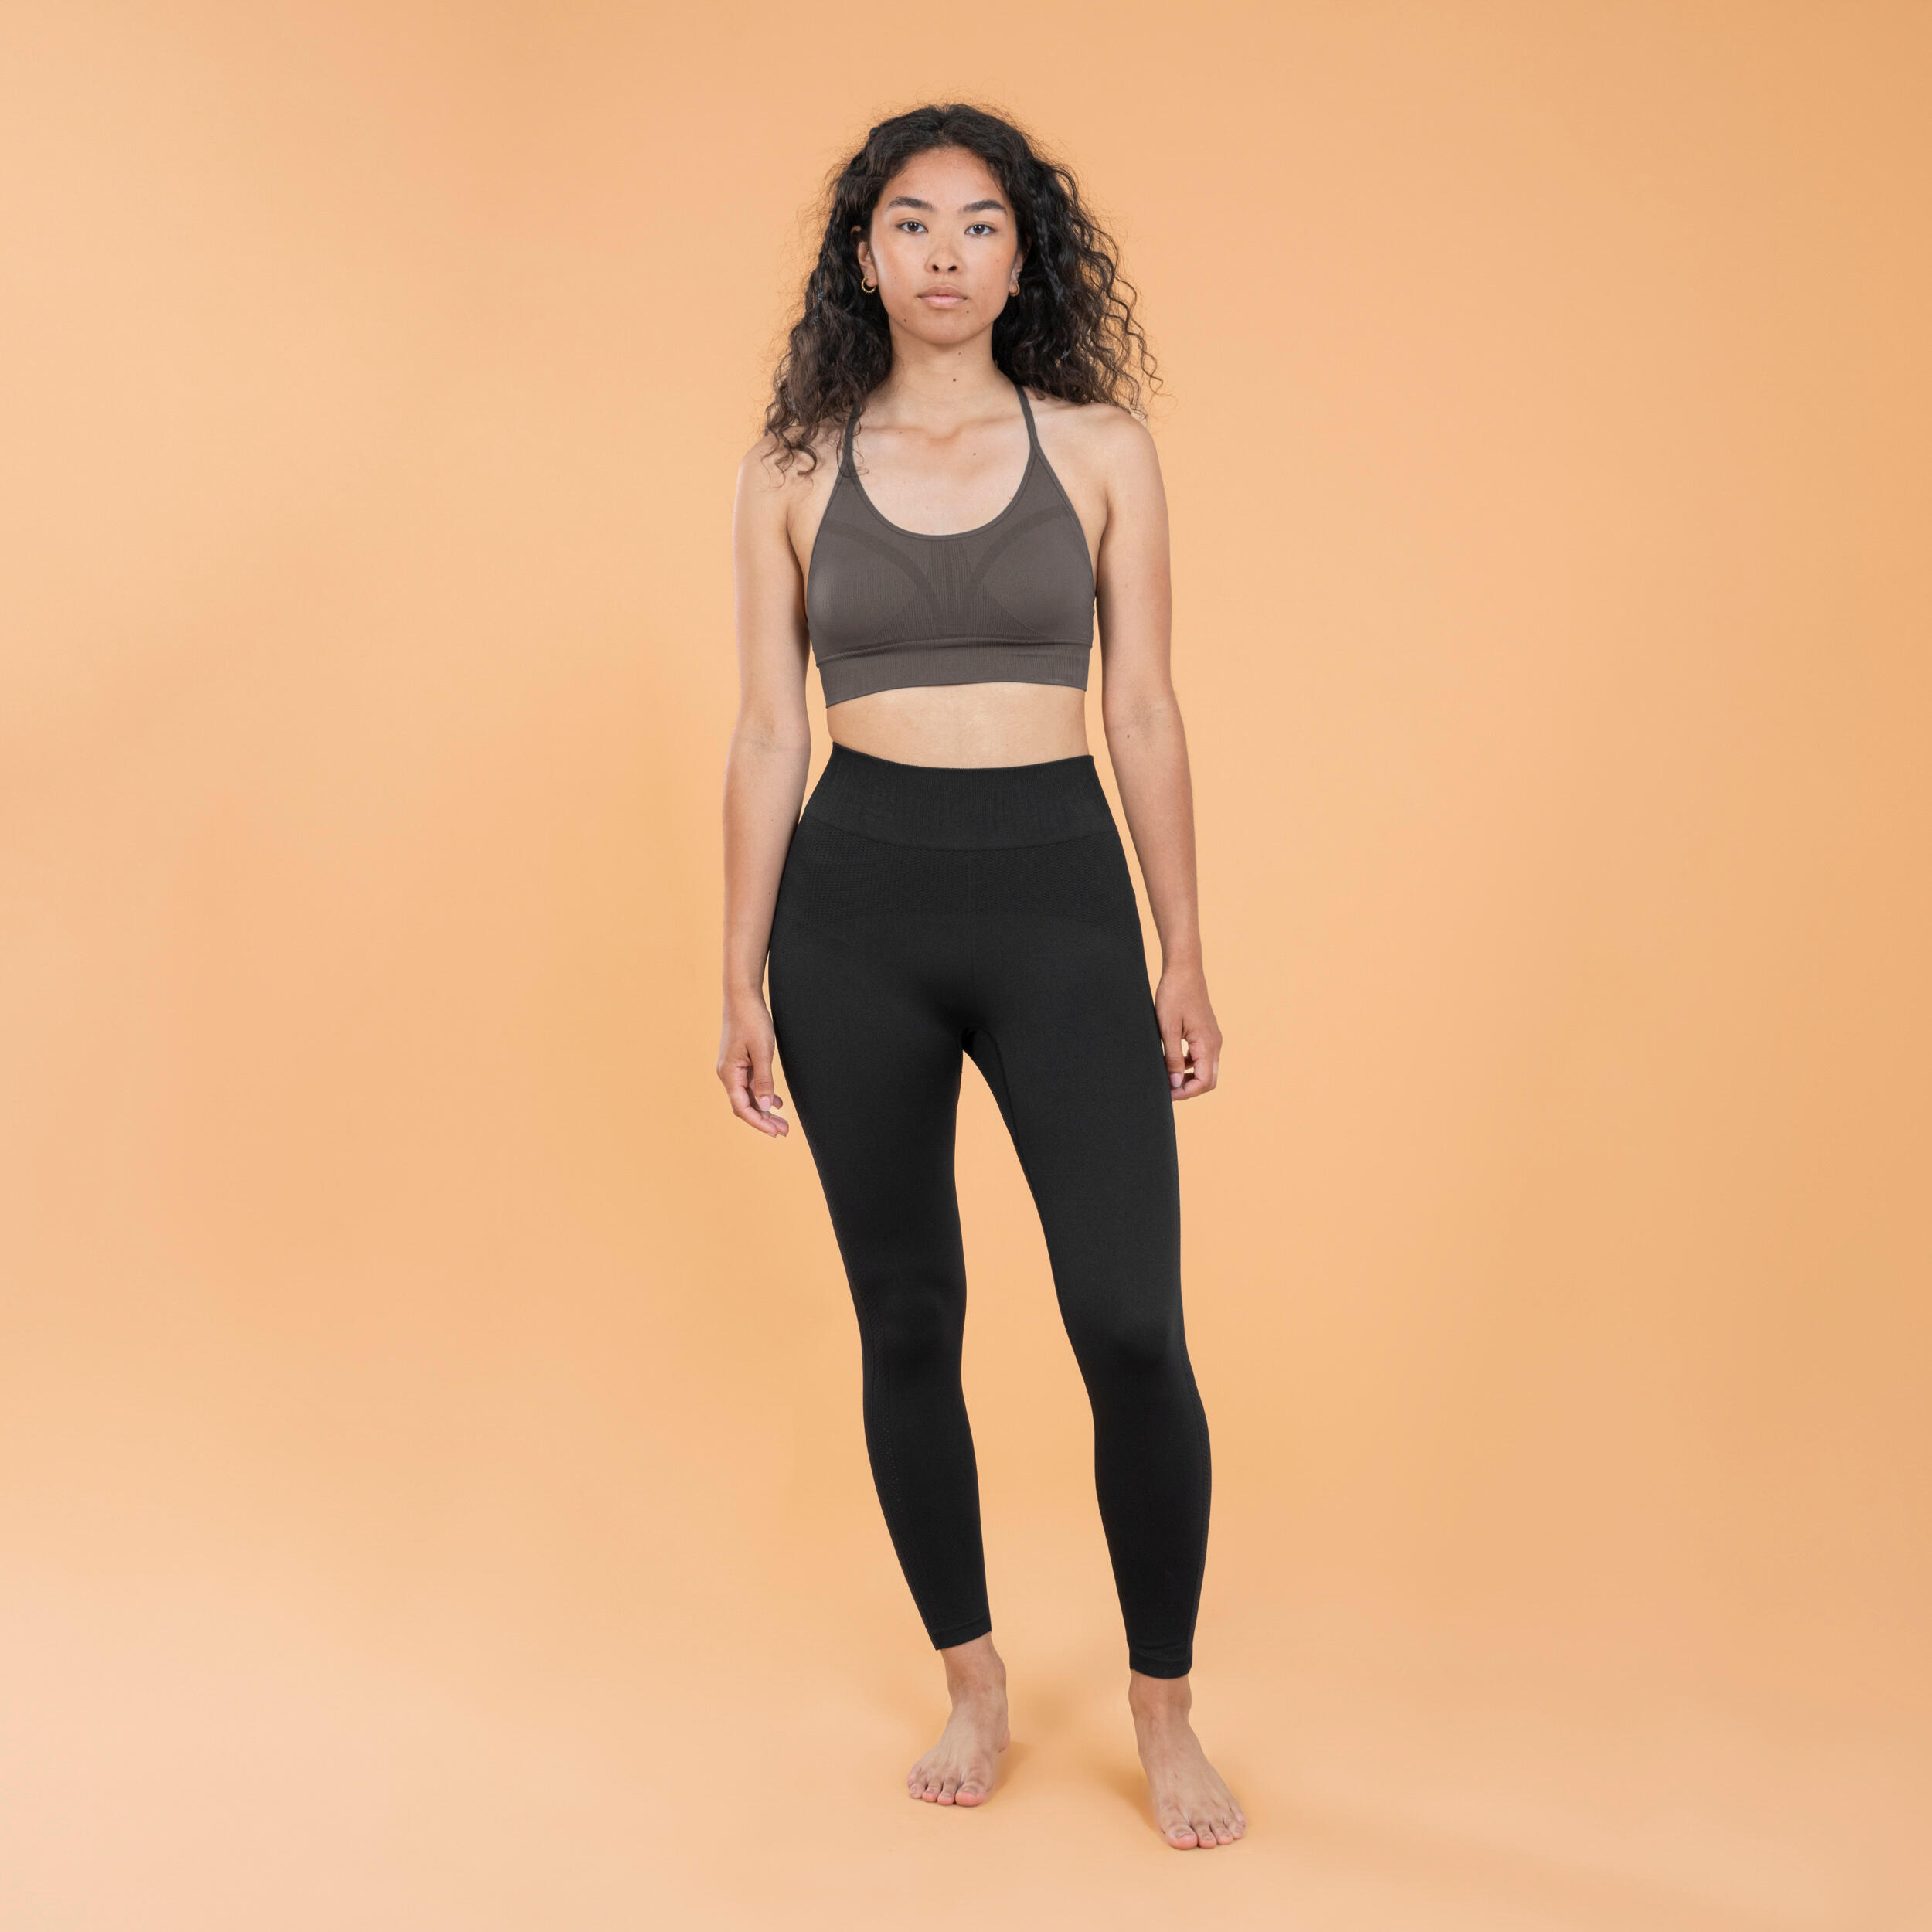 Buy Yoga Pants For Women Online